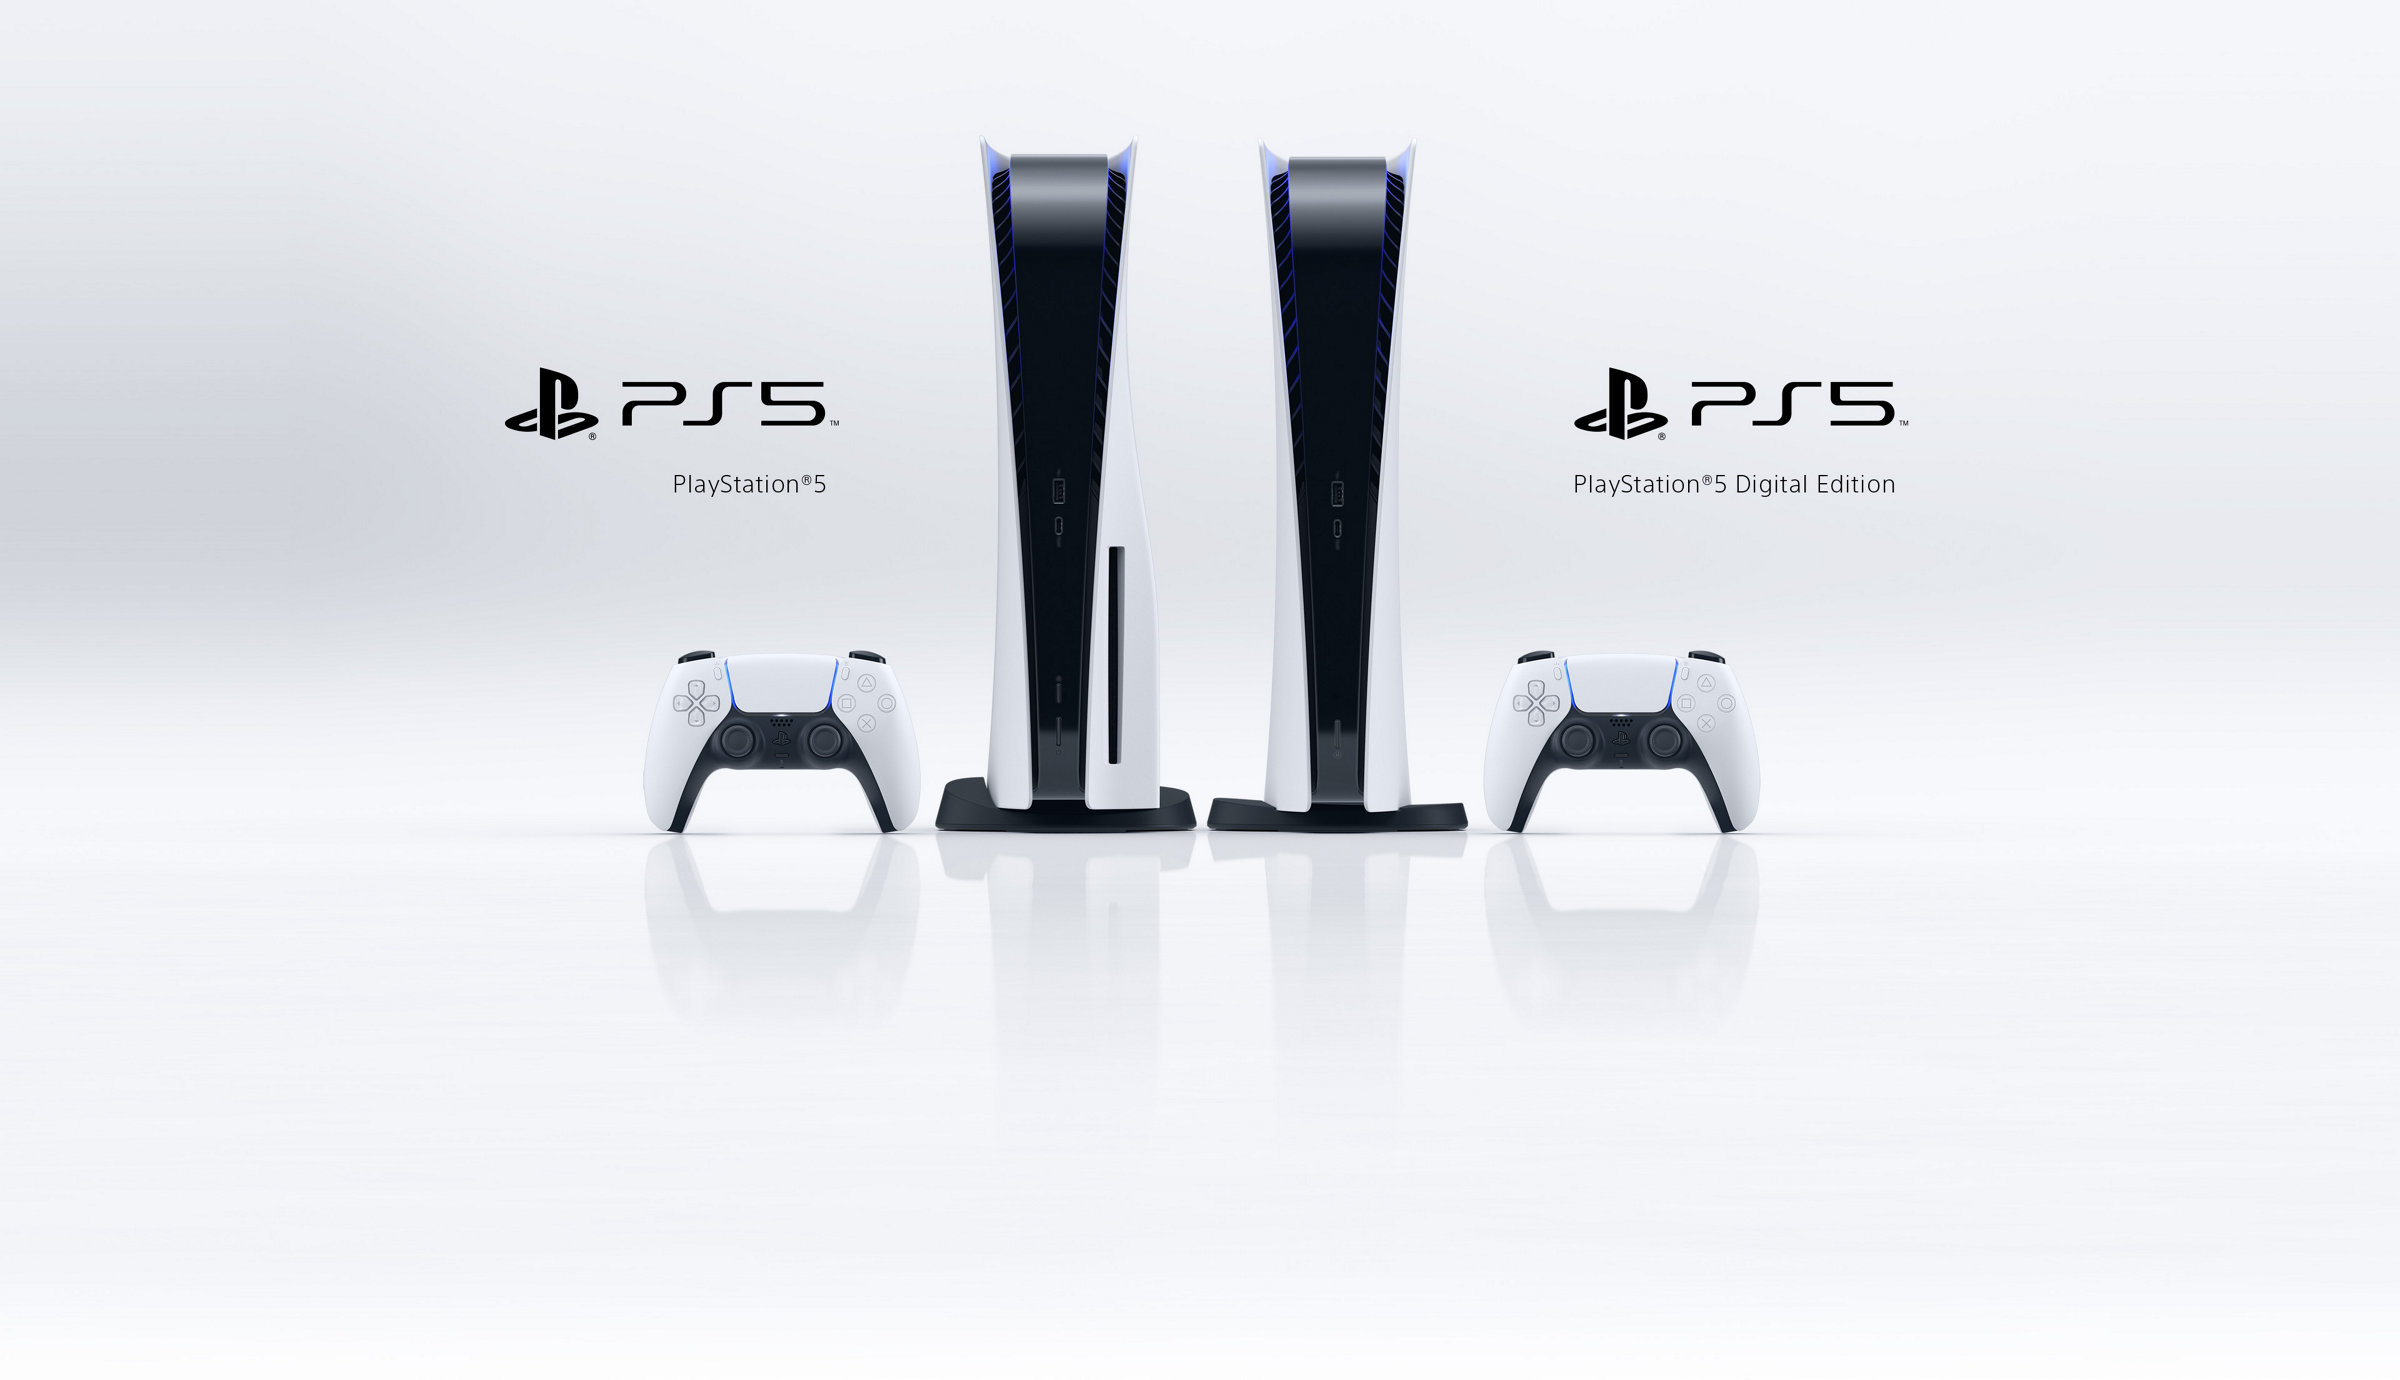 Sony PS5 getting a major UI overhaul